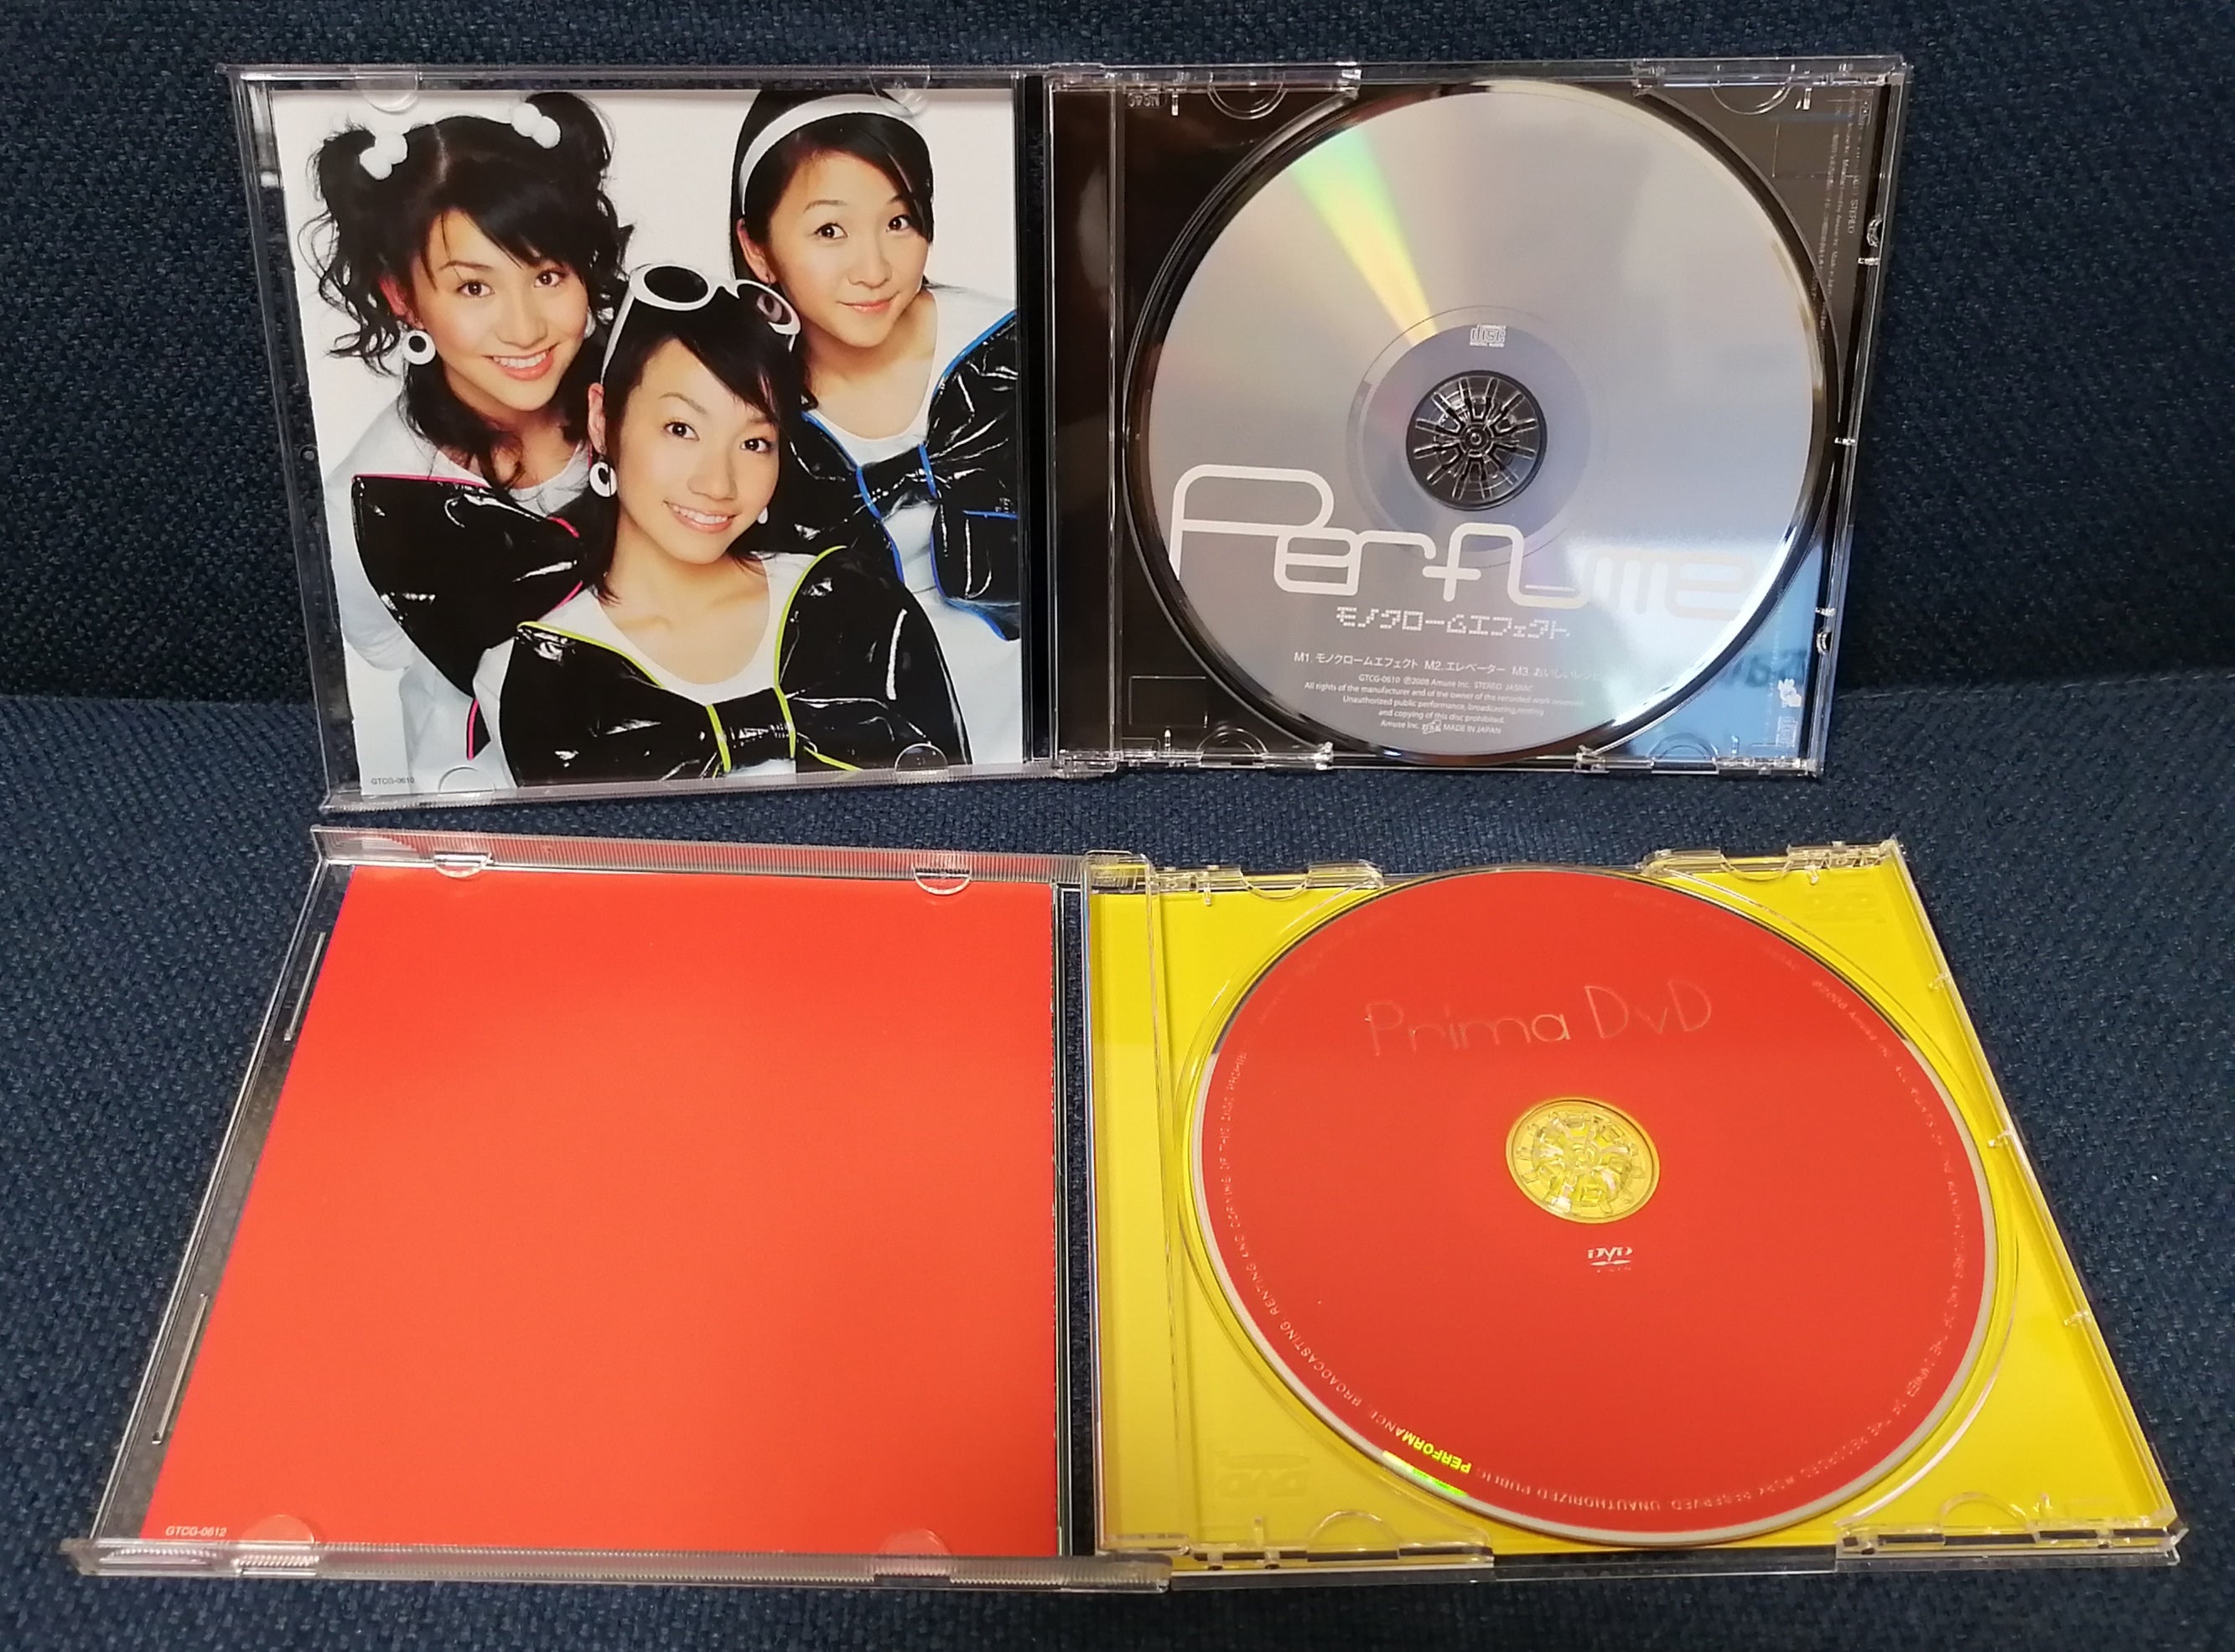 Perfume - Fan Service -Prima Box- 3CD+DVD Compilation Box Set 